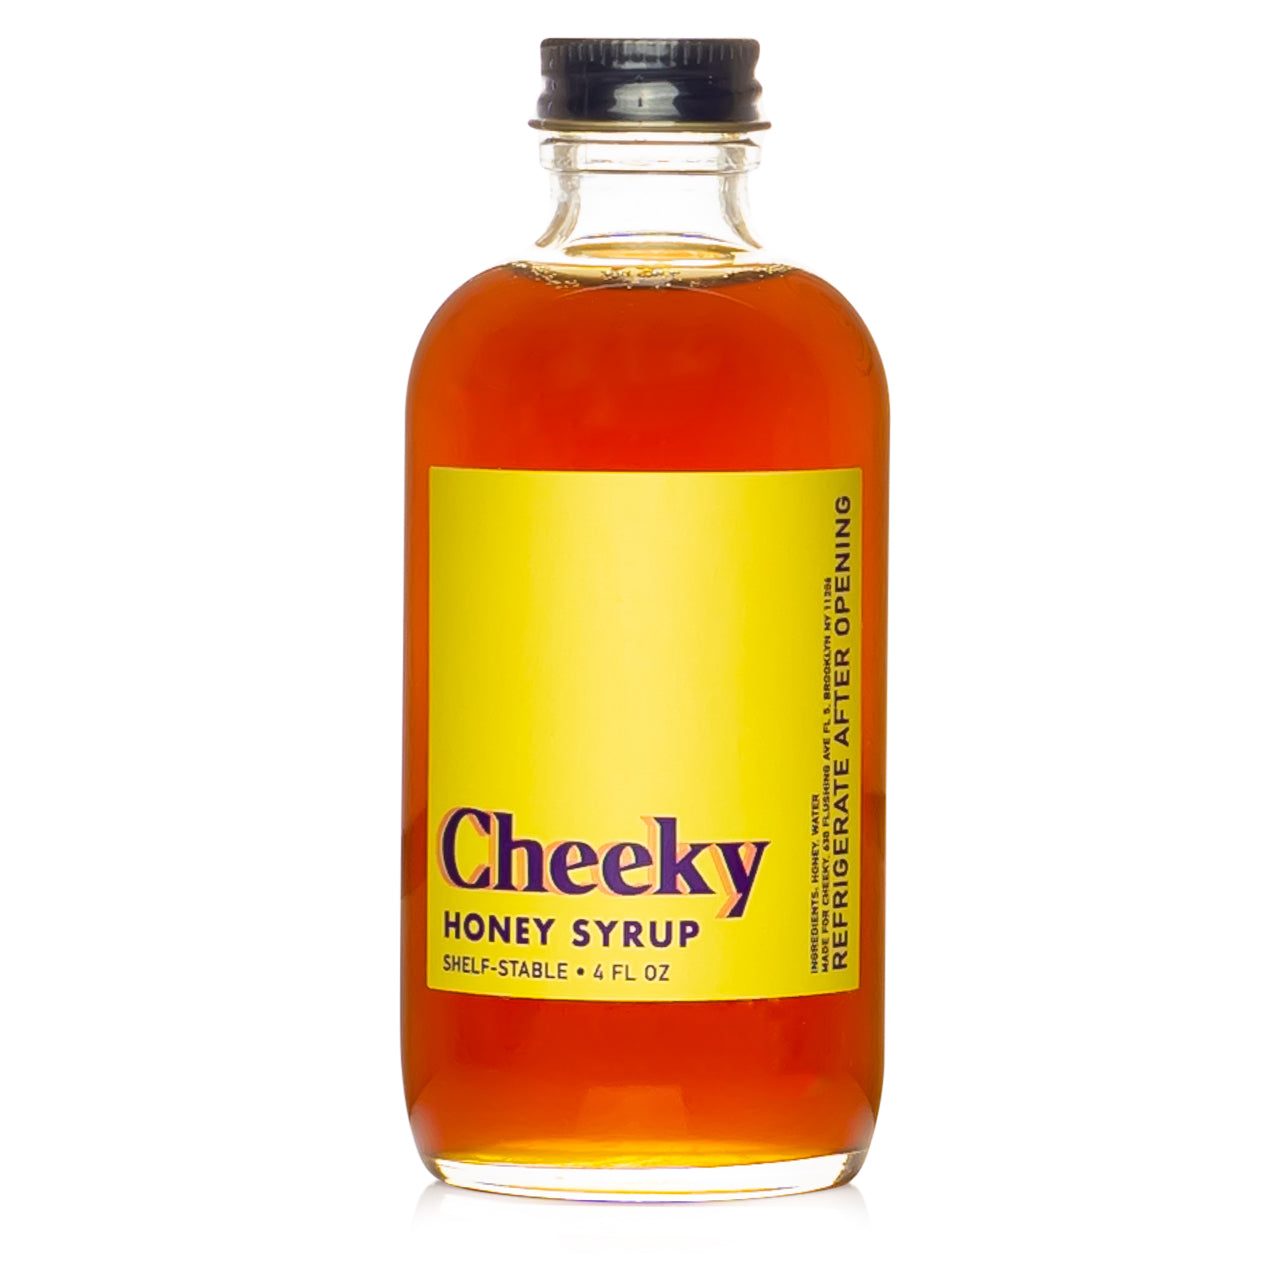 Cheeky Honey Syrup